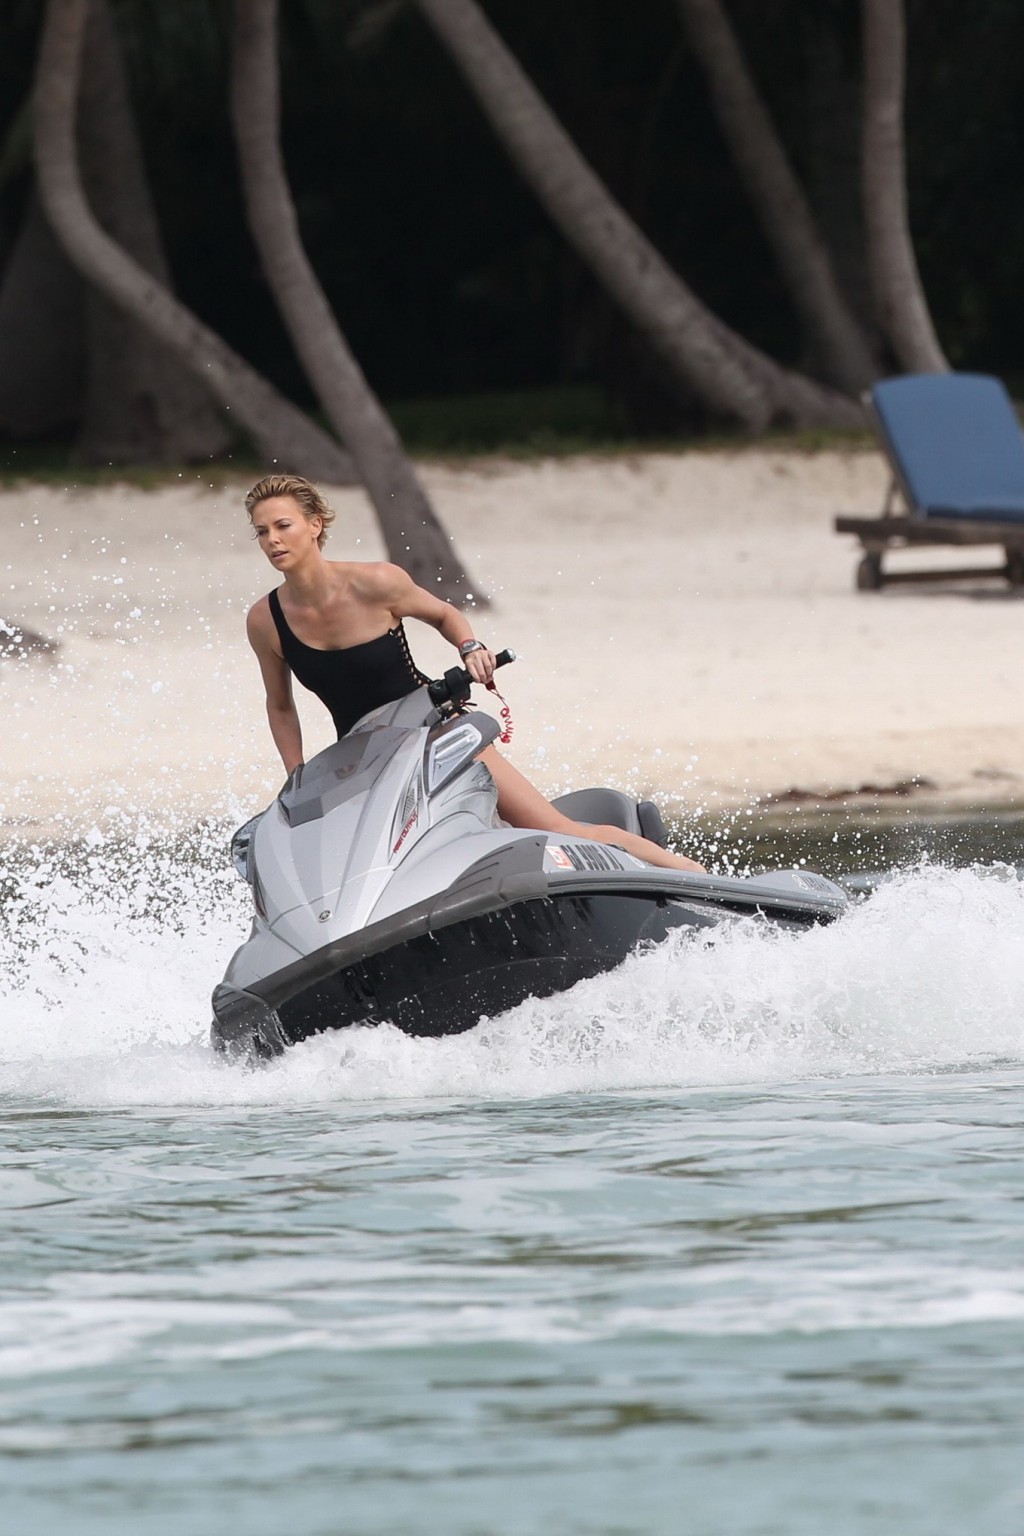 Charlize theron jet skiing in schwarzem monokini während des photoshoot in miami beac
 #75201221